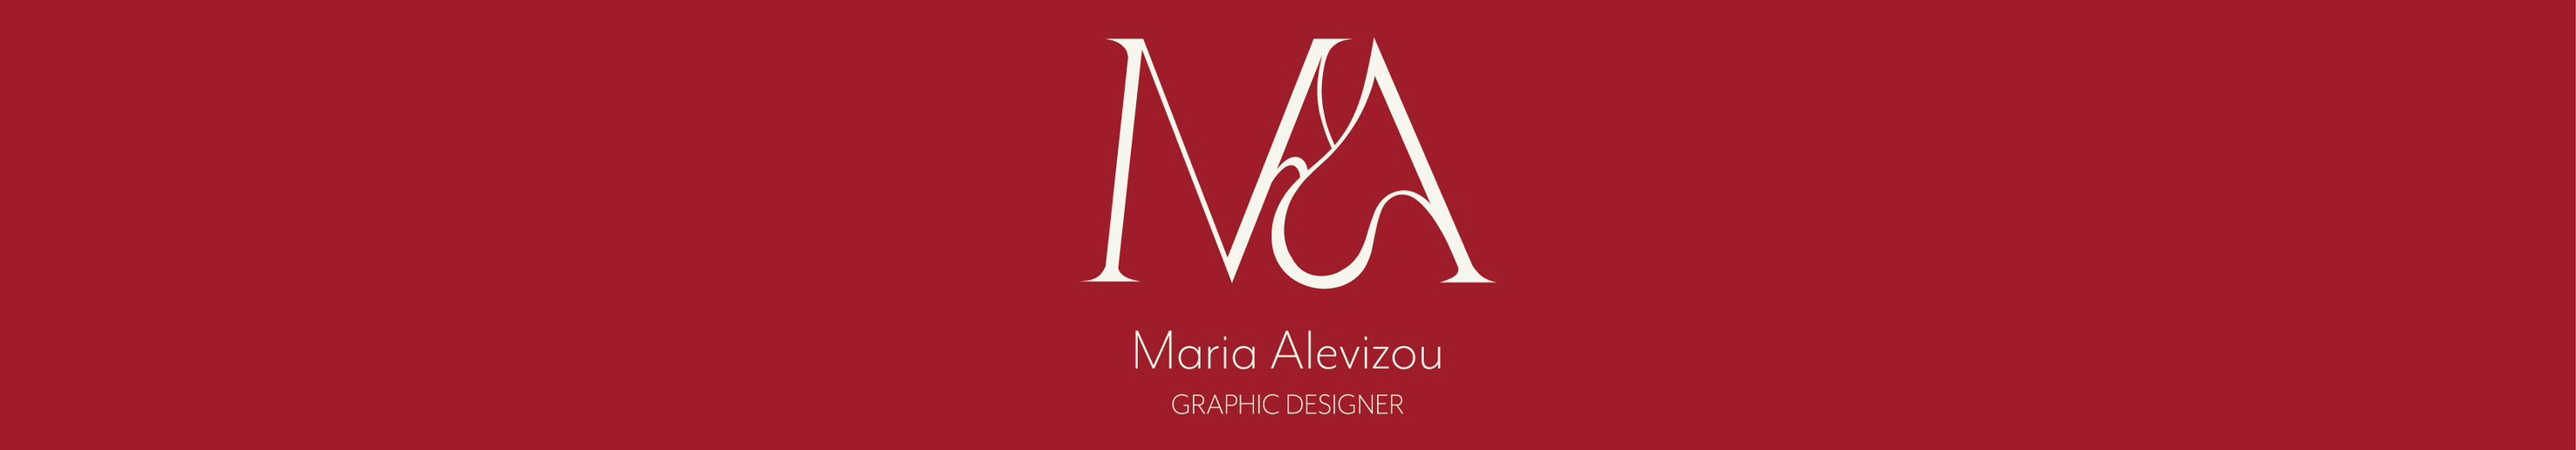 Баннер профиля Maria Alevizou